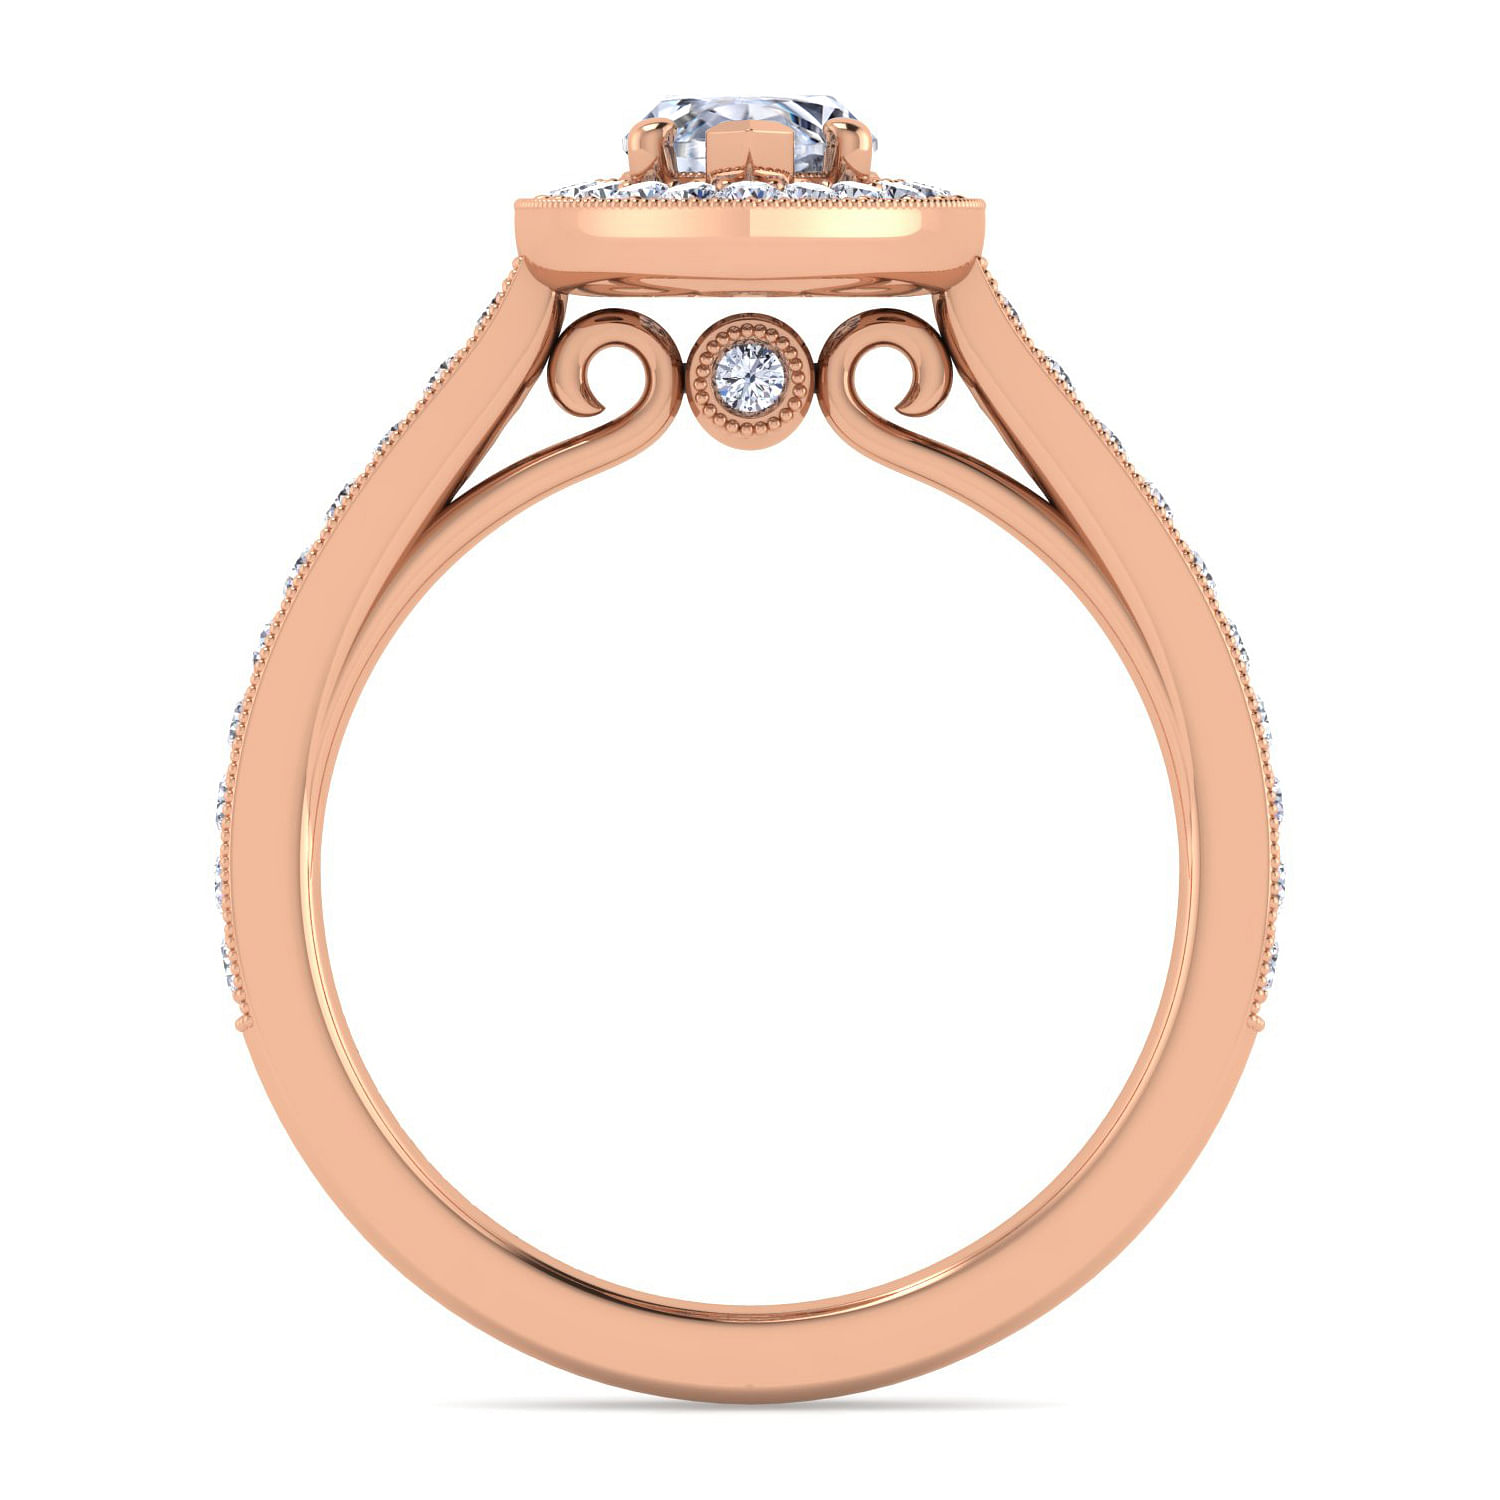 Vintage Inspired 14K Rose Gold Marquise Halo Diamond Engagement Ring